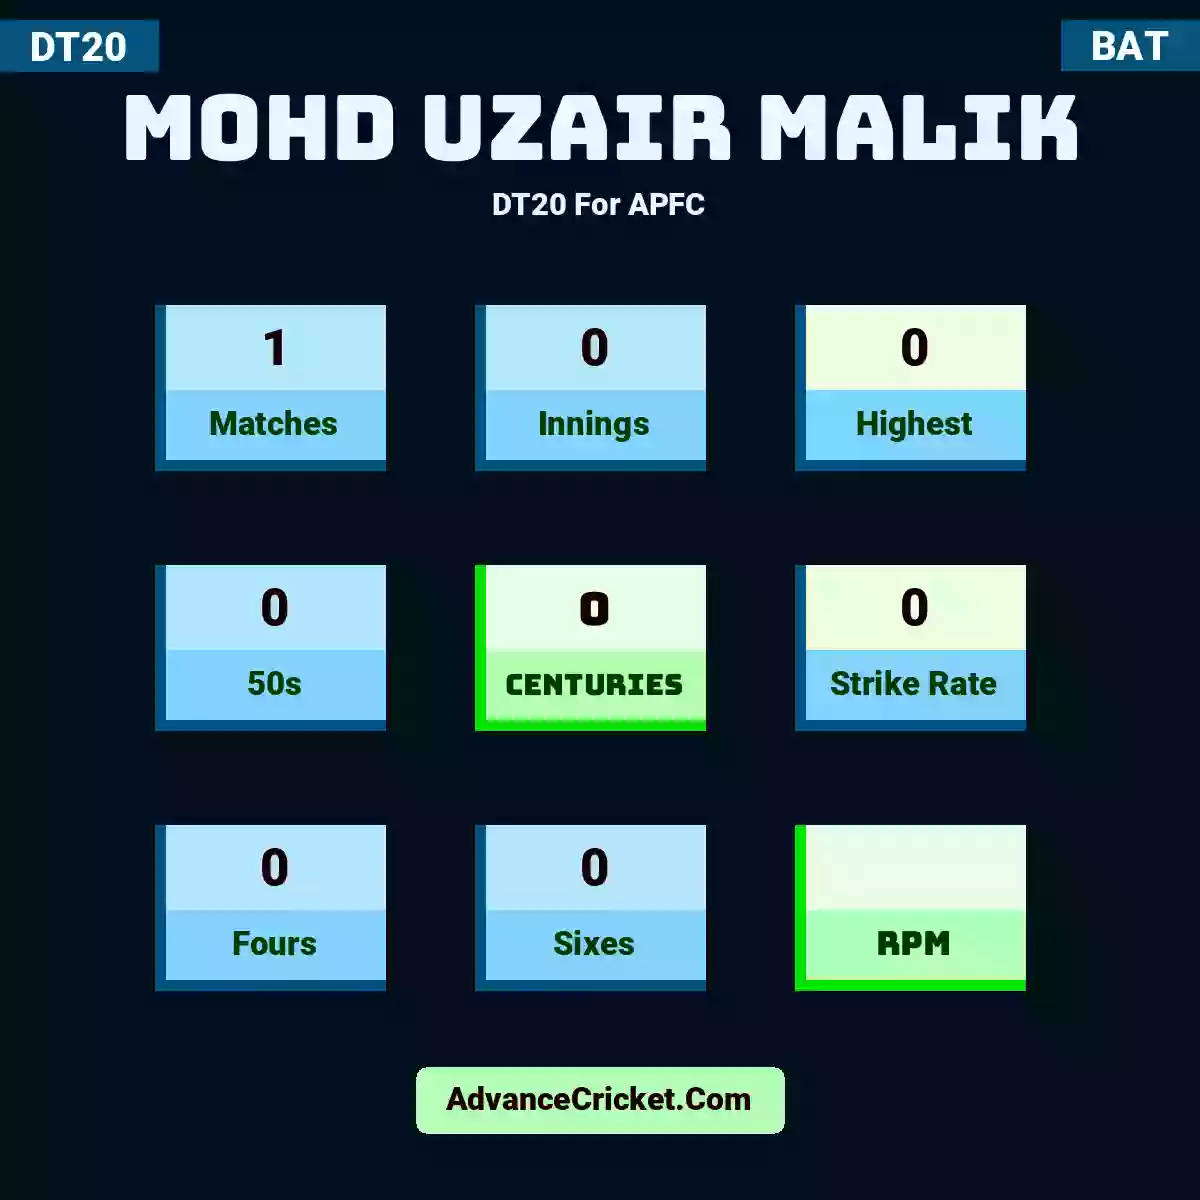 Mohd Uzair Malik DT20  For APFC, Mohd Uzair Malik played 1 matches, scored 0 runs as highest, 0 half-centuries, and 0 centuries, with a strike rate of 0. M.Uzair.Malik hit 0 fours and 0 sixes.